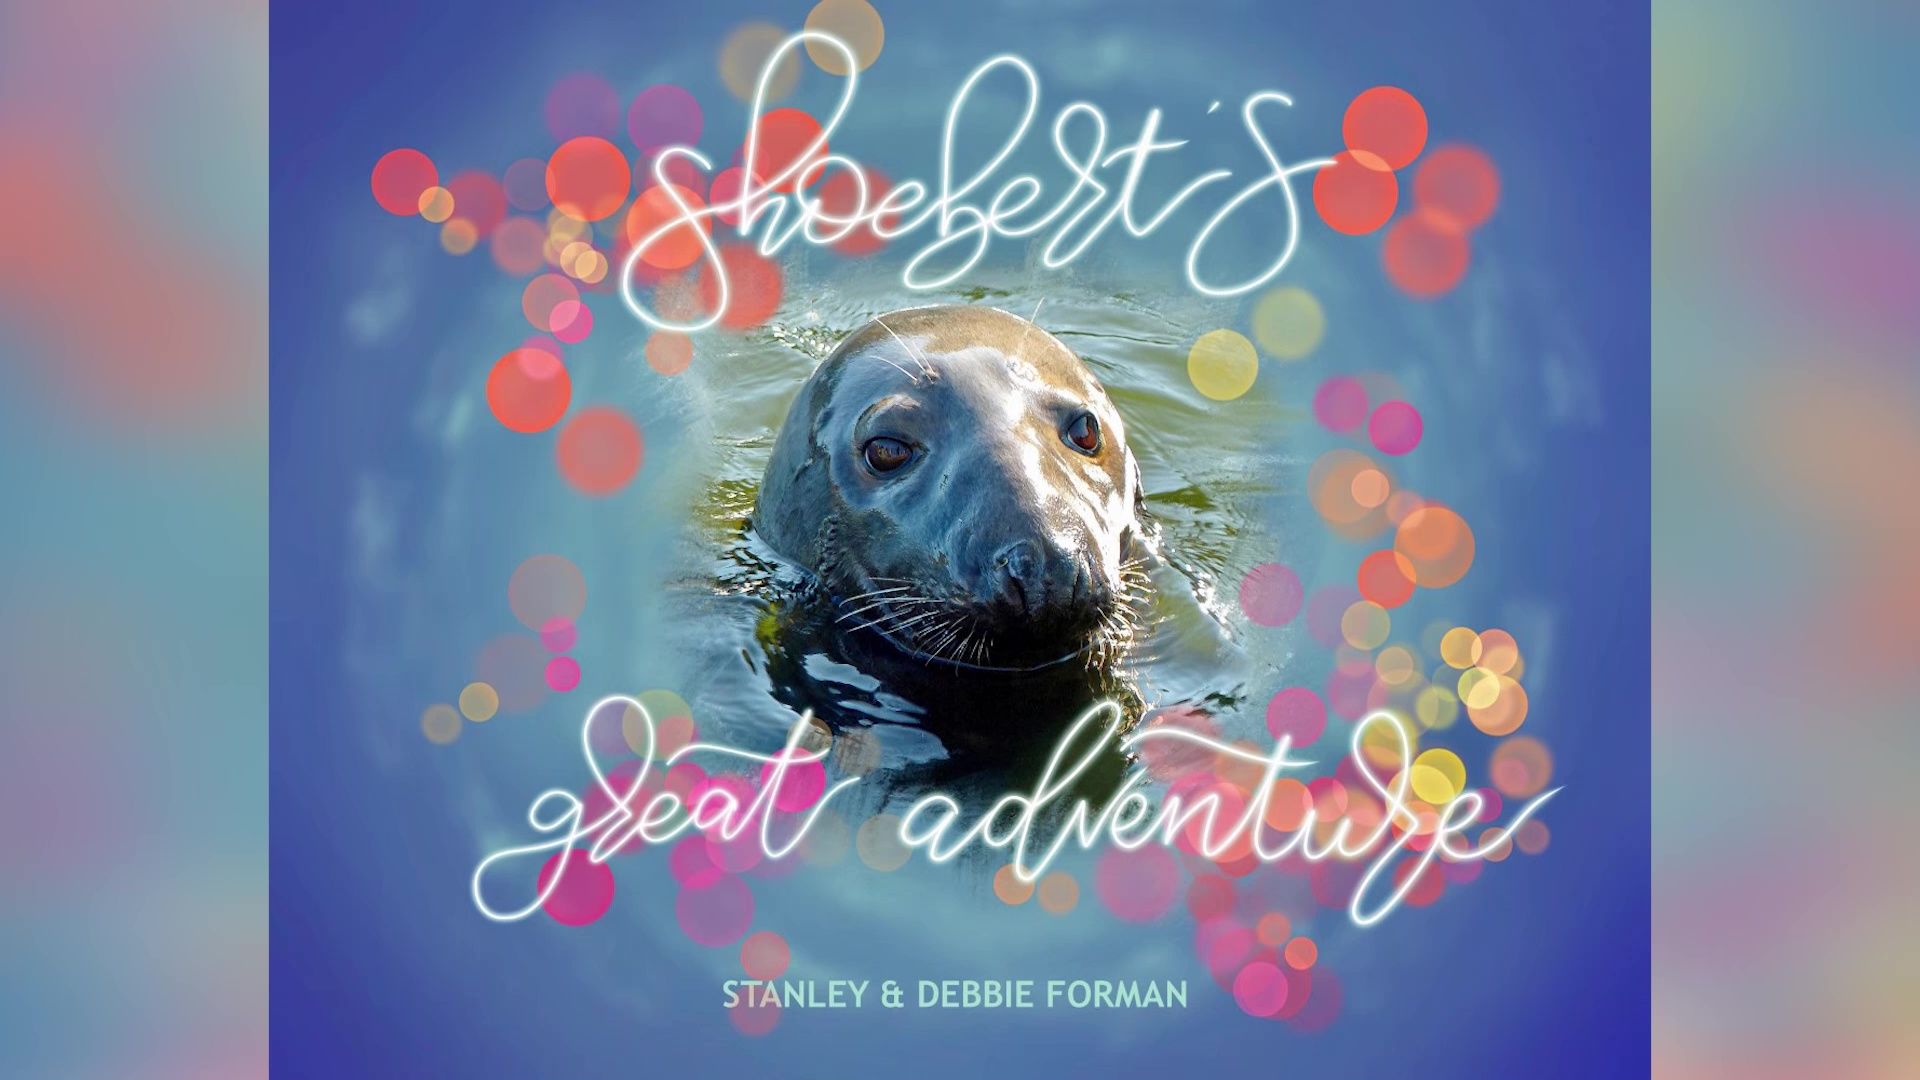 'Shoebert' the gray seal now starring in new children's book